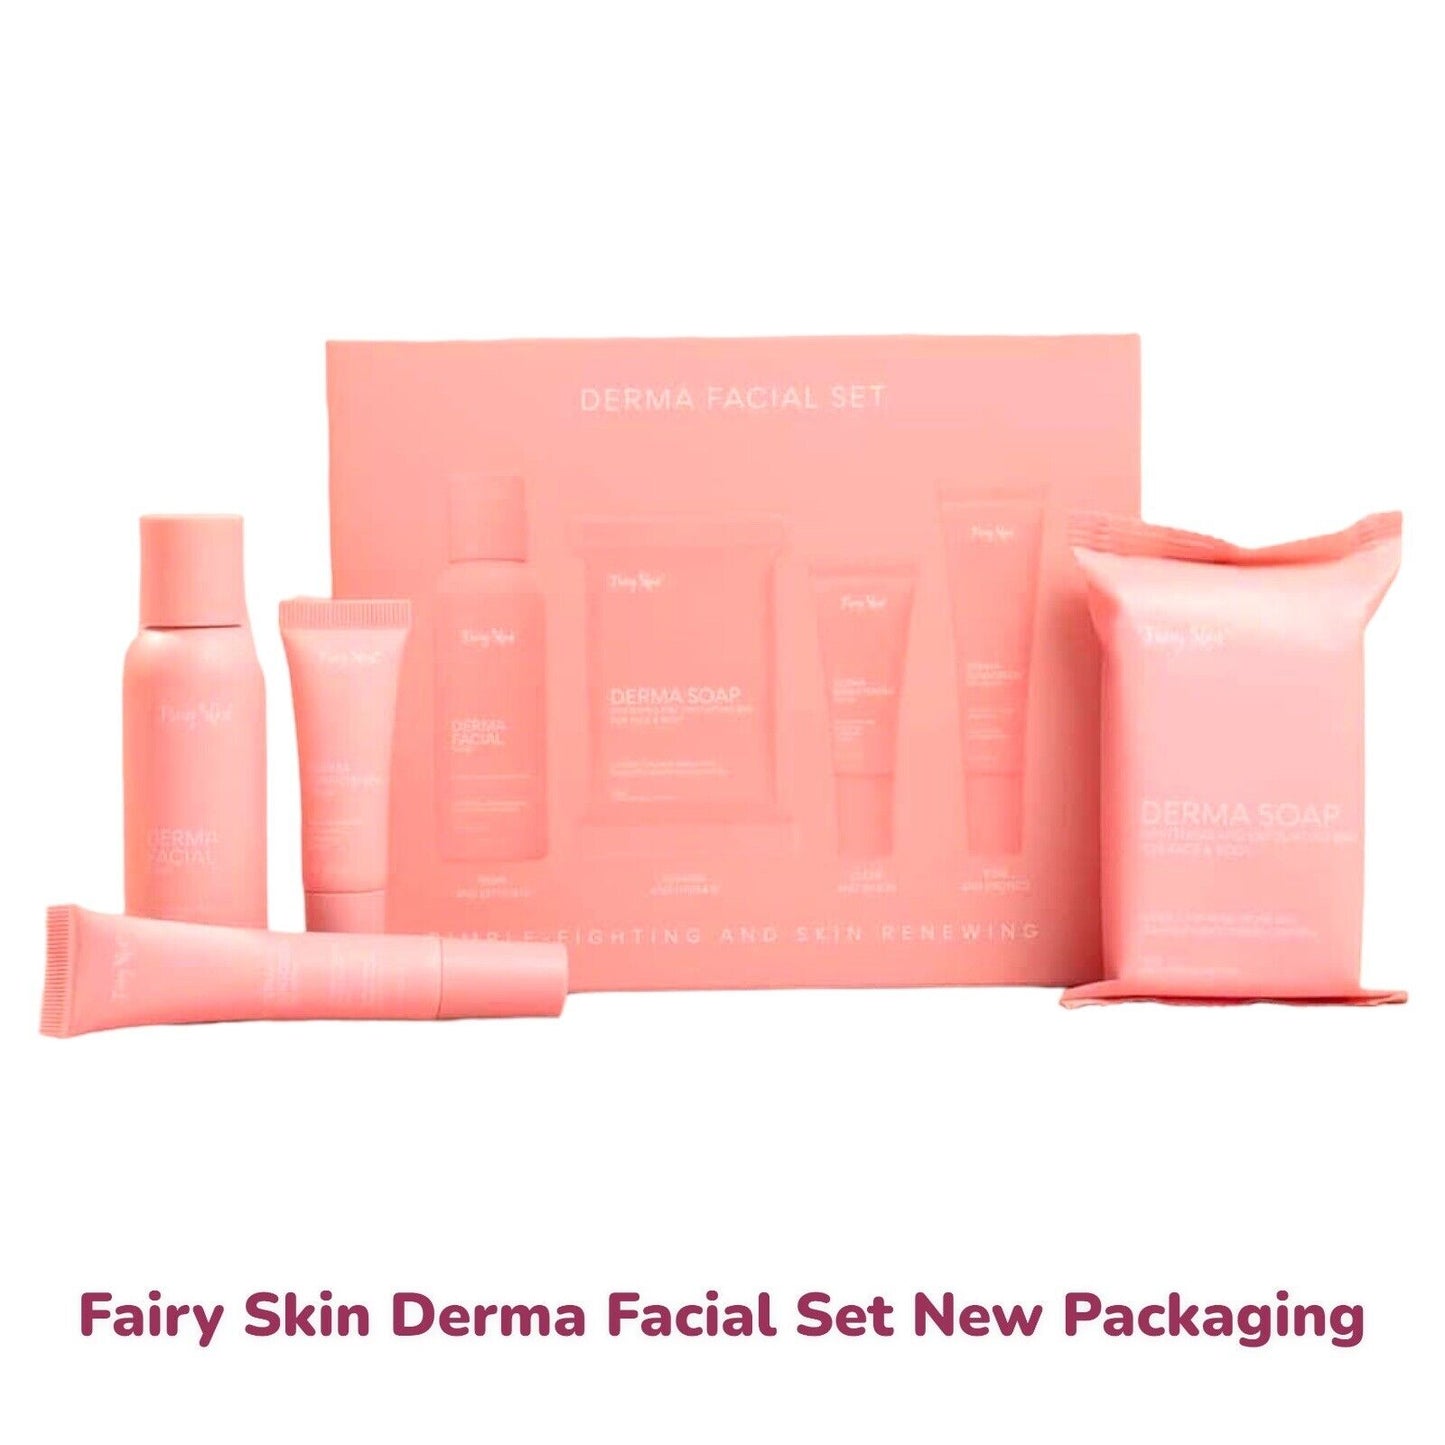 Fairy Skin Derma Facial Set New Packaging